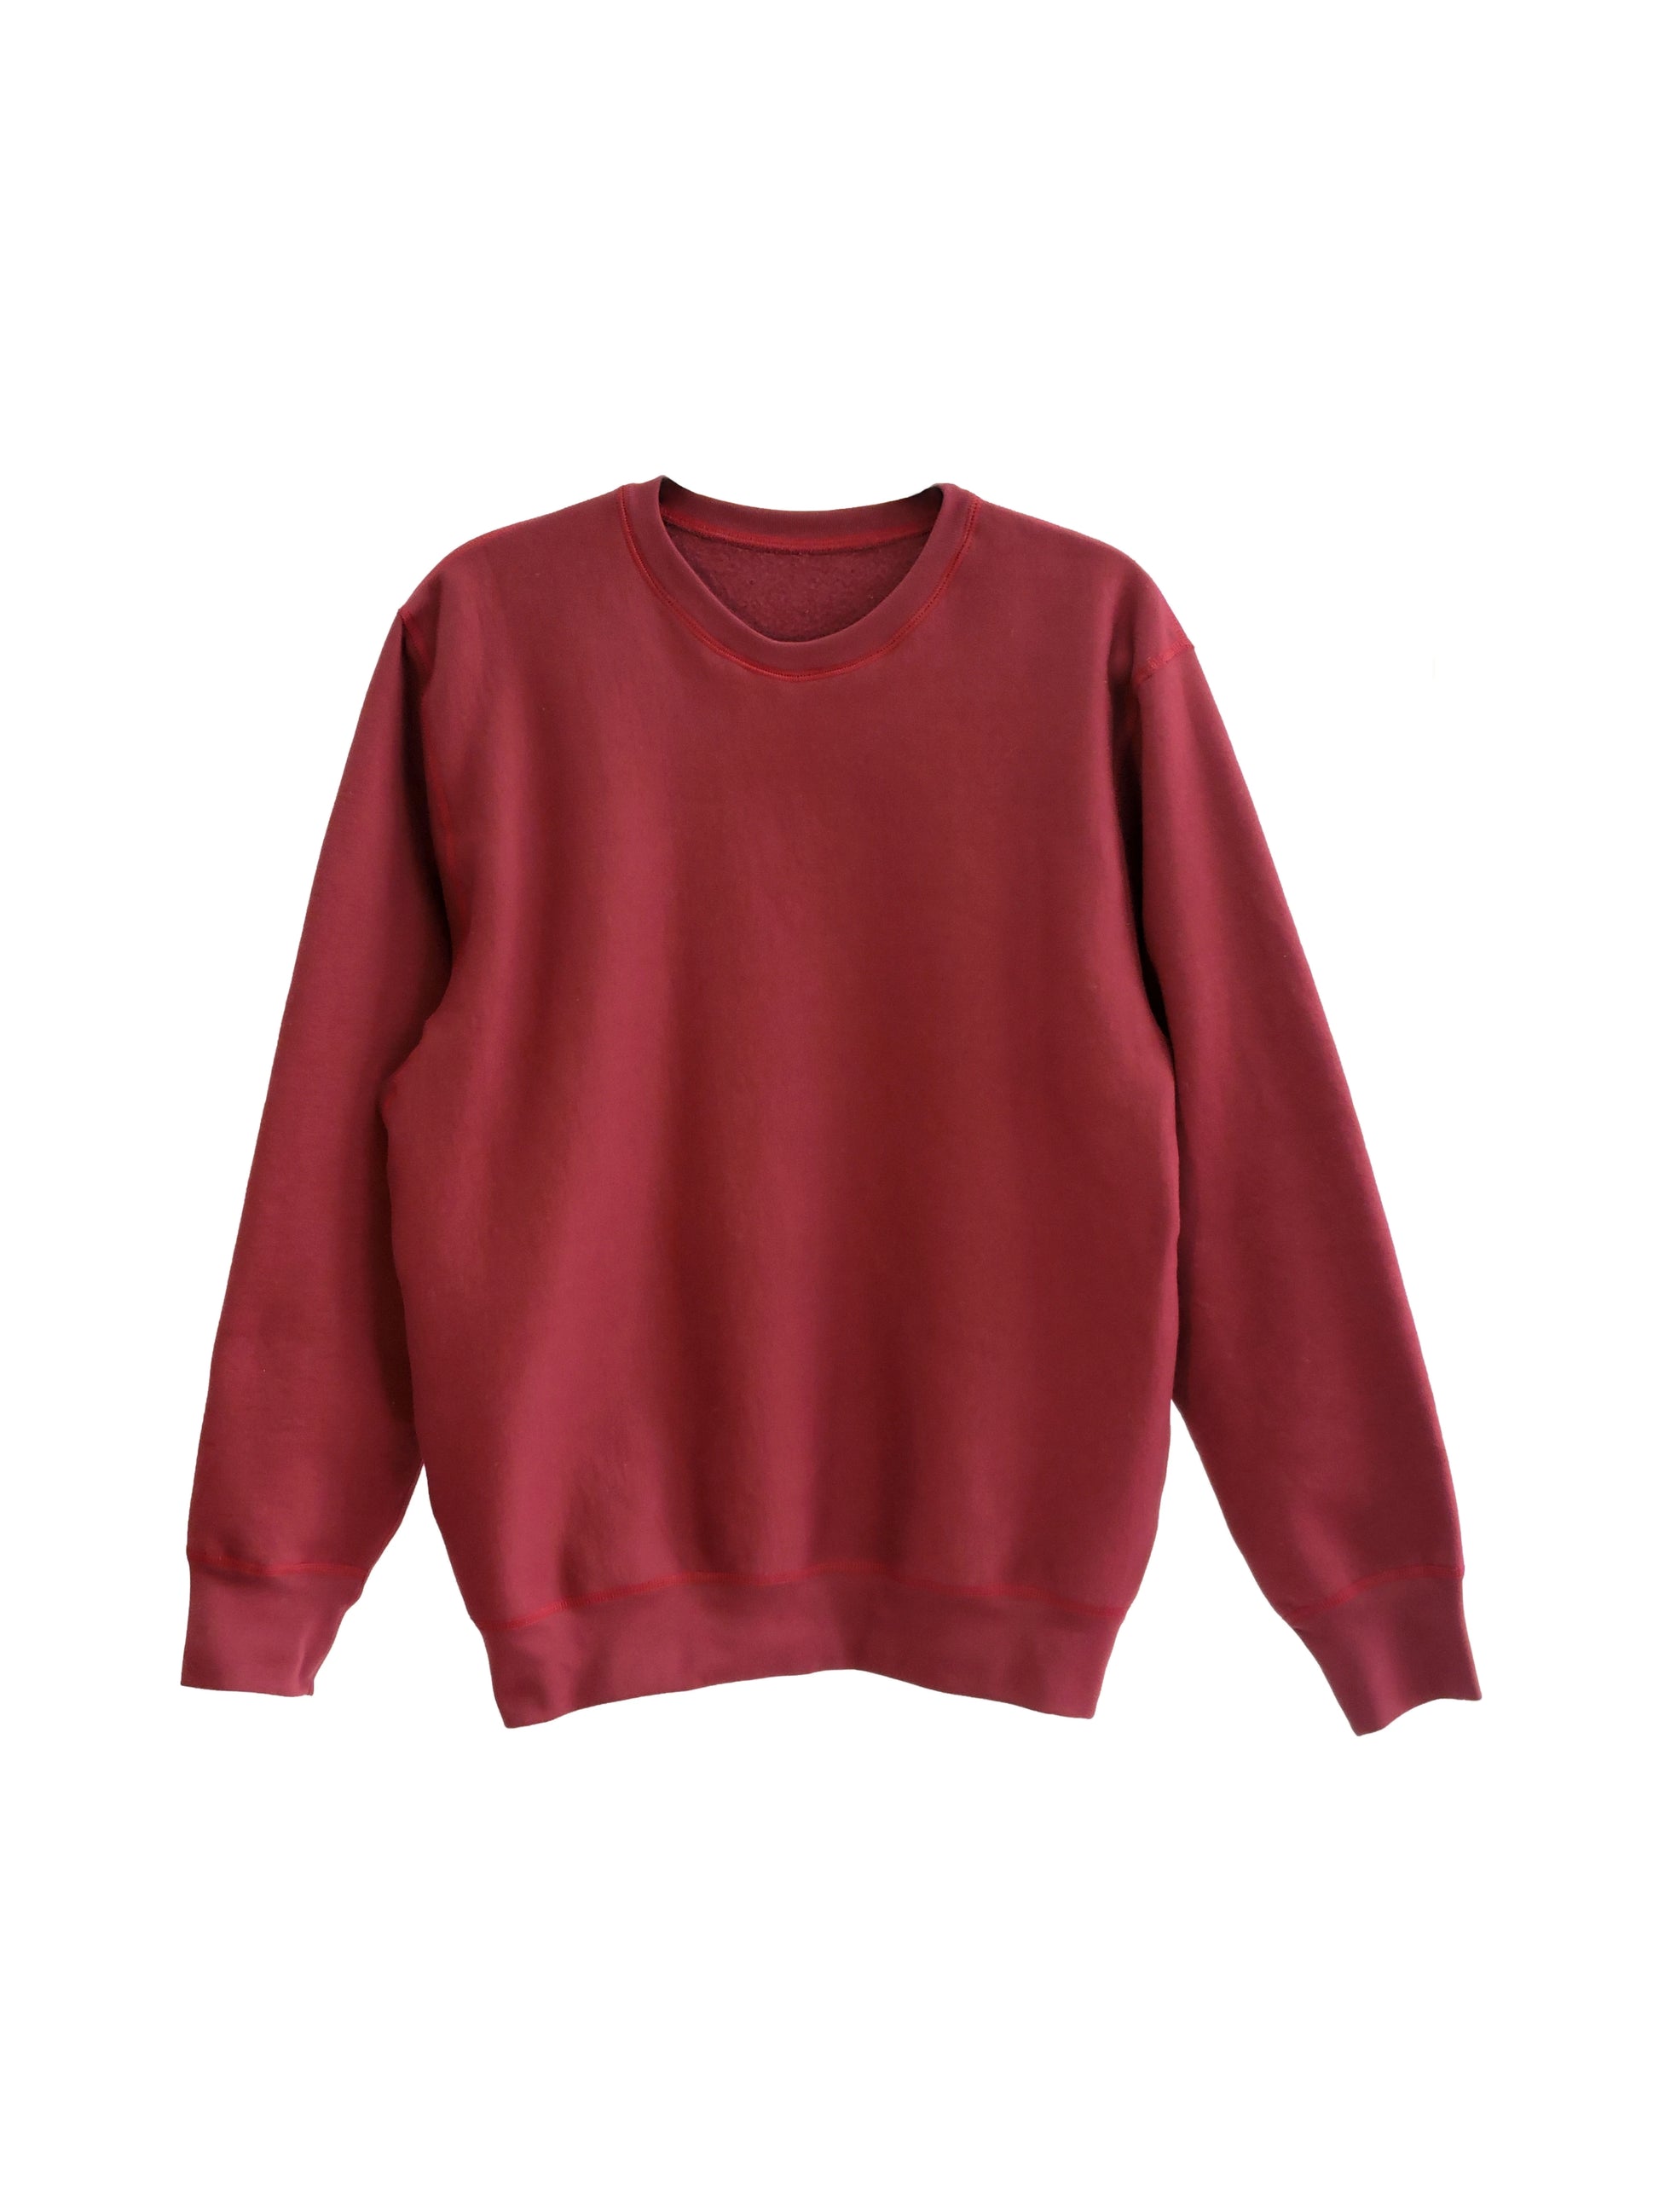 Essential Burgundy Crewneck Sweater